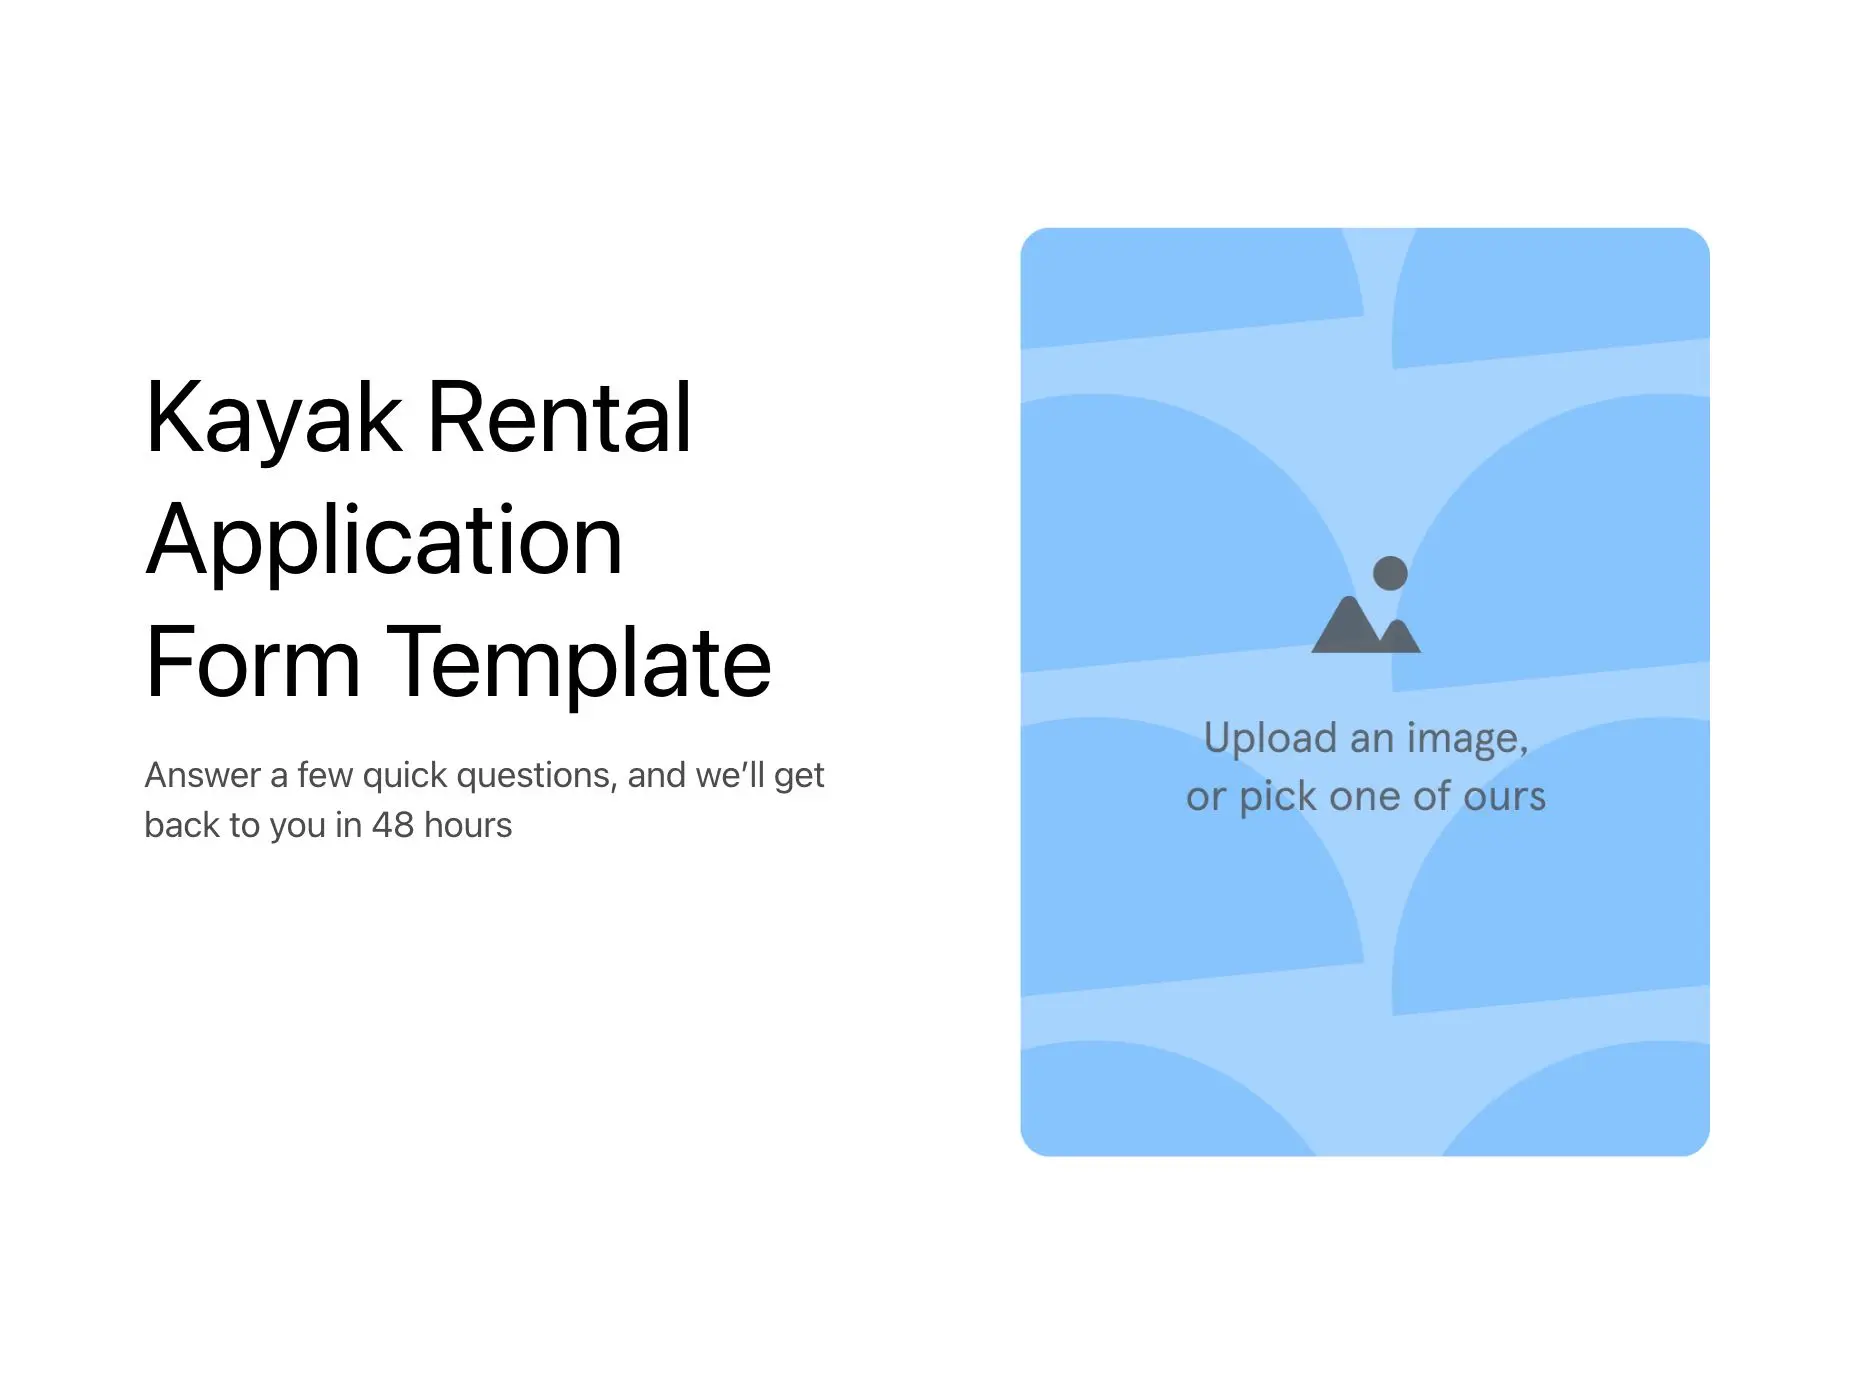 Kayak Rental Application Form Template Hero